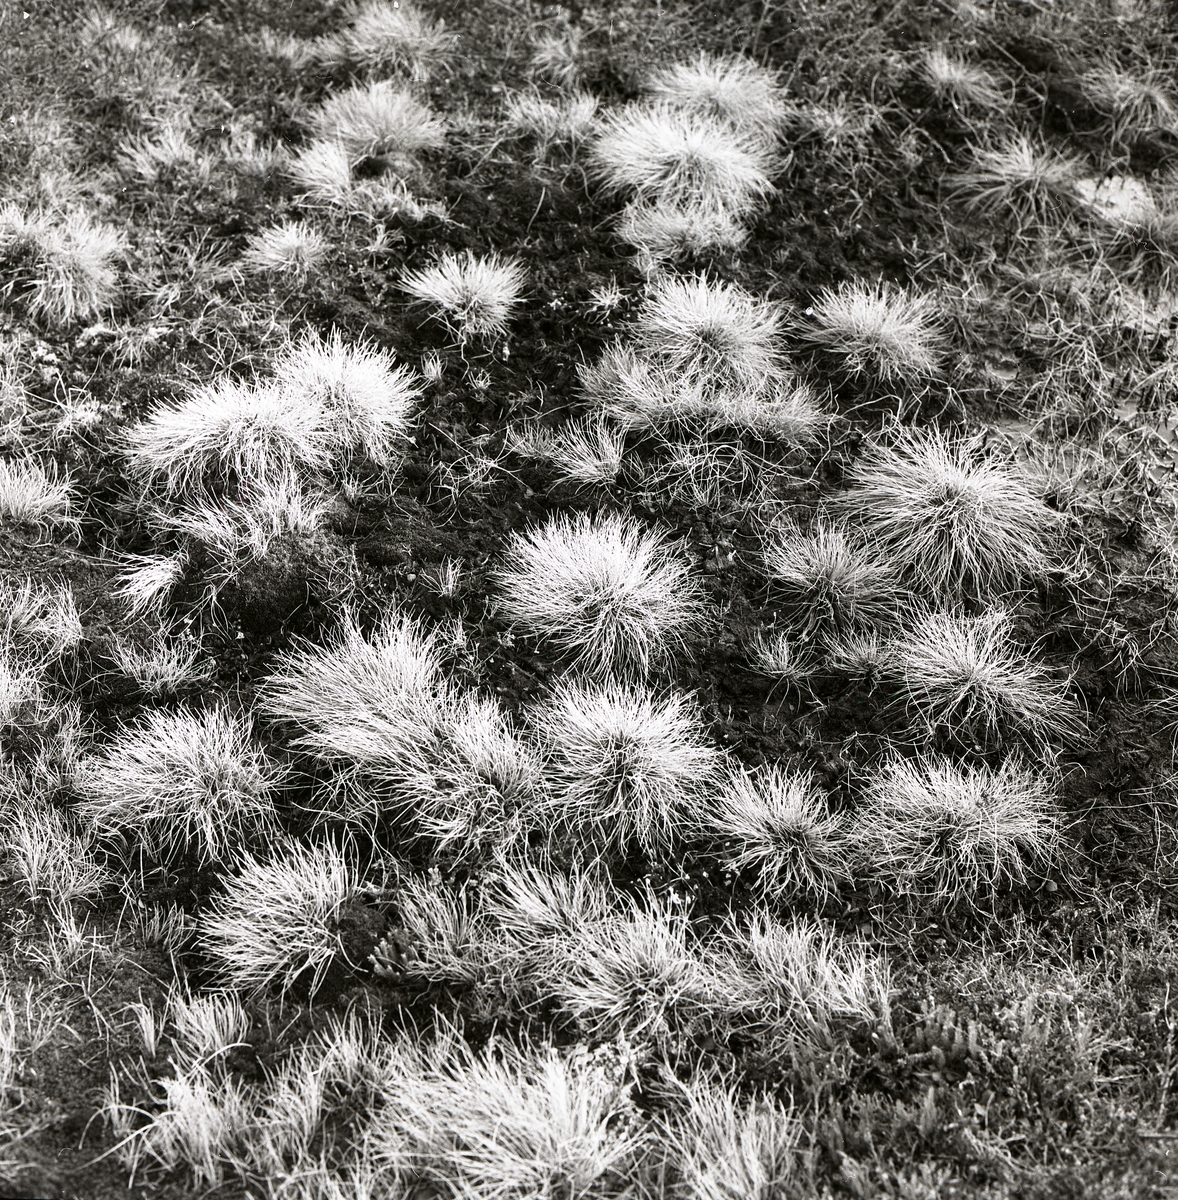 Tussiga tuvor på marken i Keinovuopio, juni 1977.